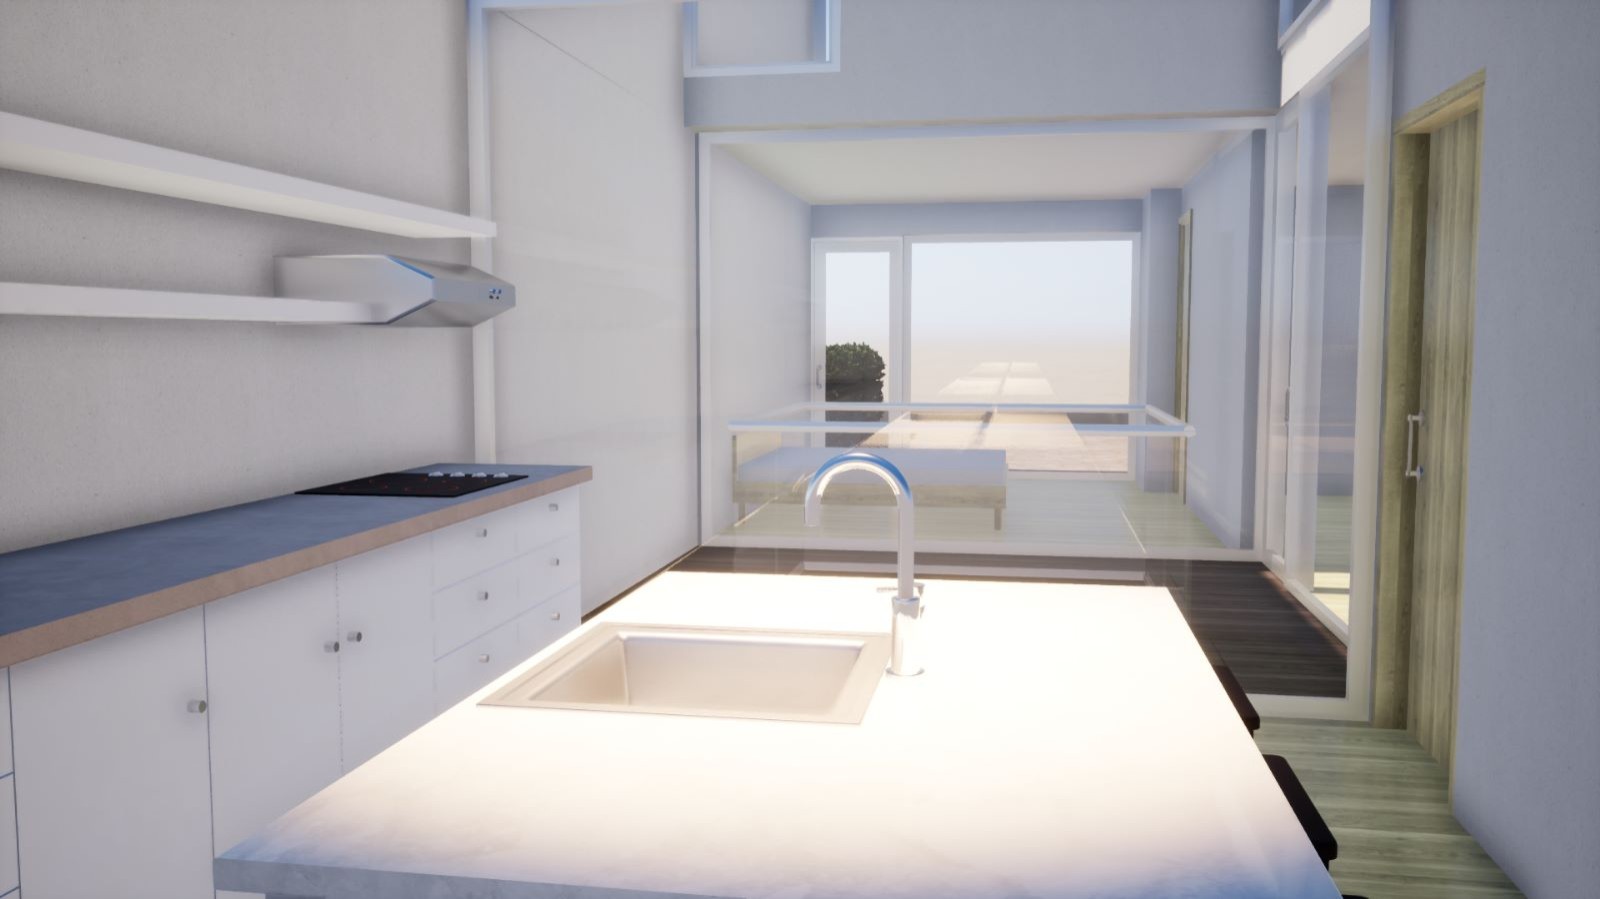 4 bedroom villa, new construction with seaview, for sale in Tavira, Algarve_228008